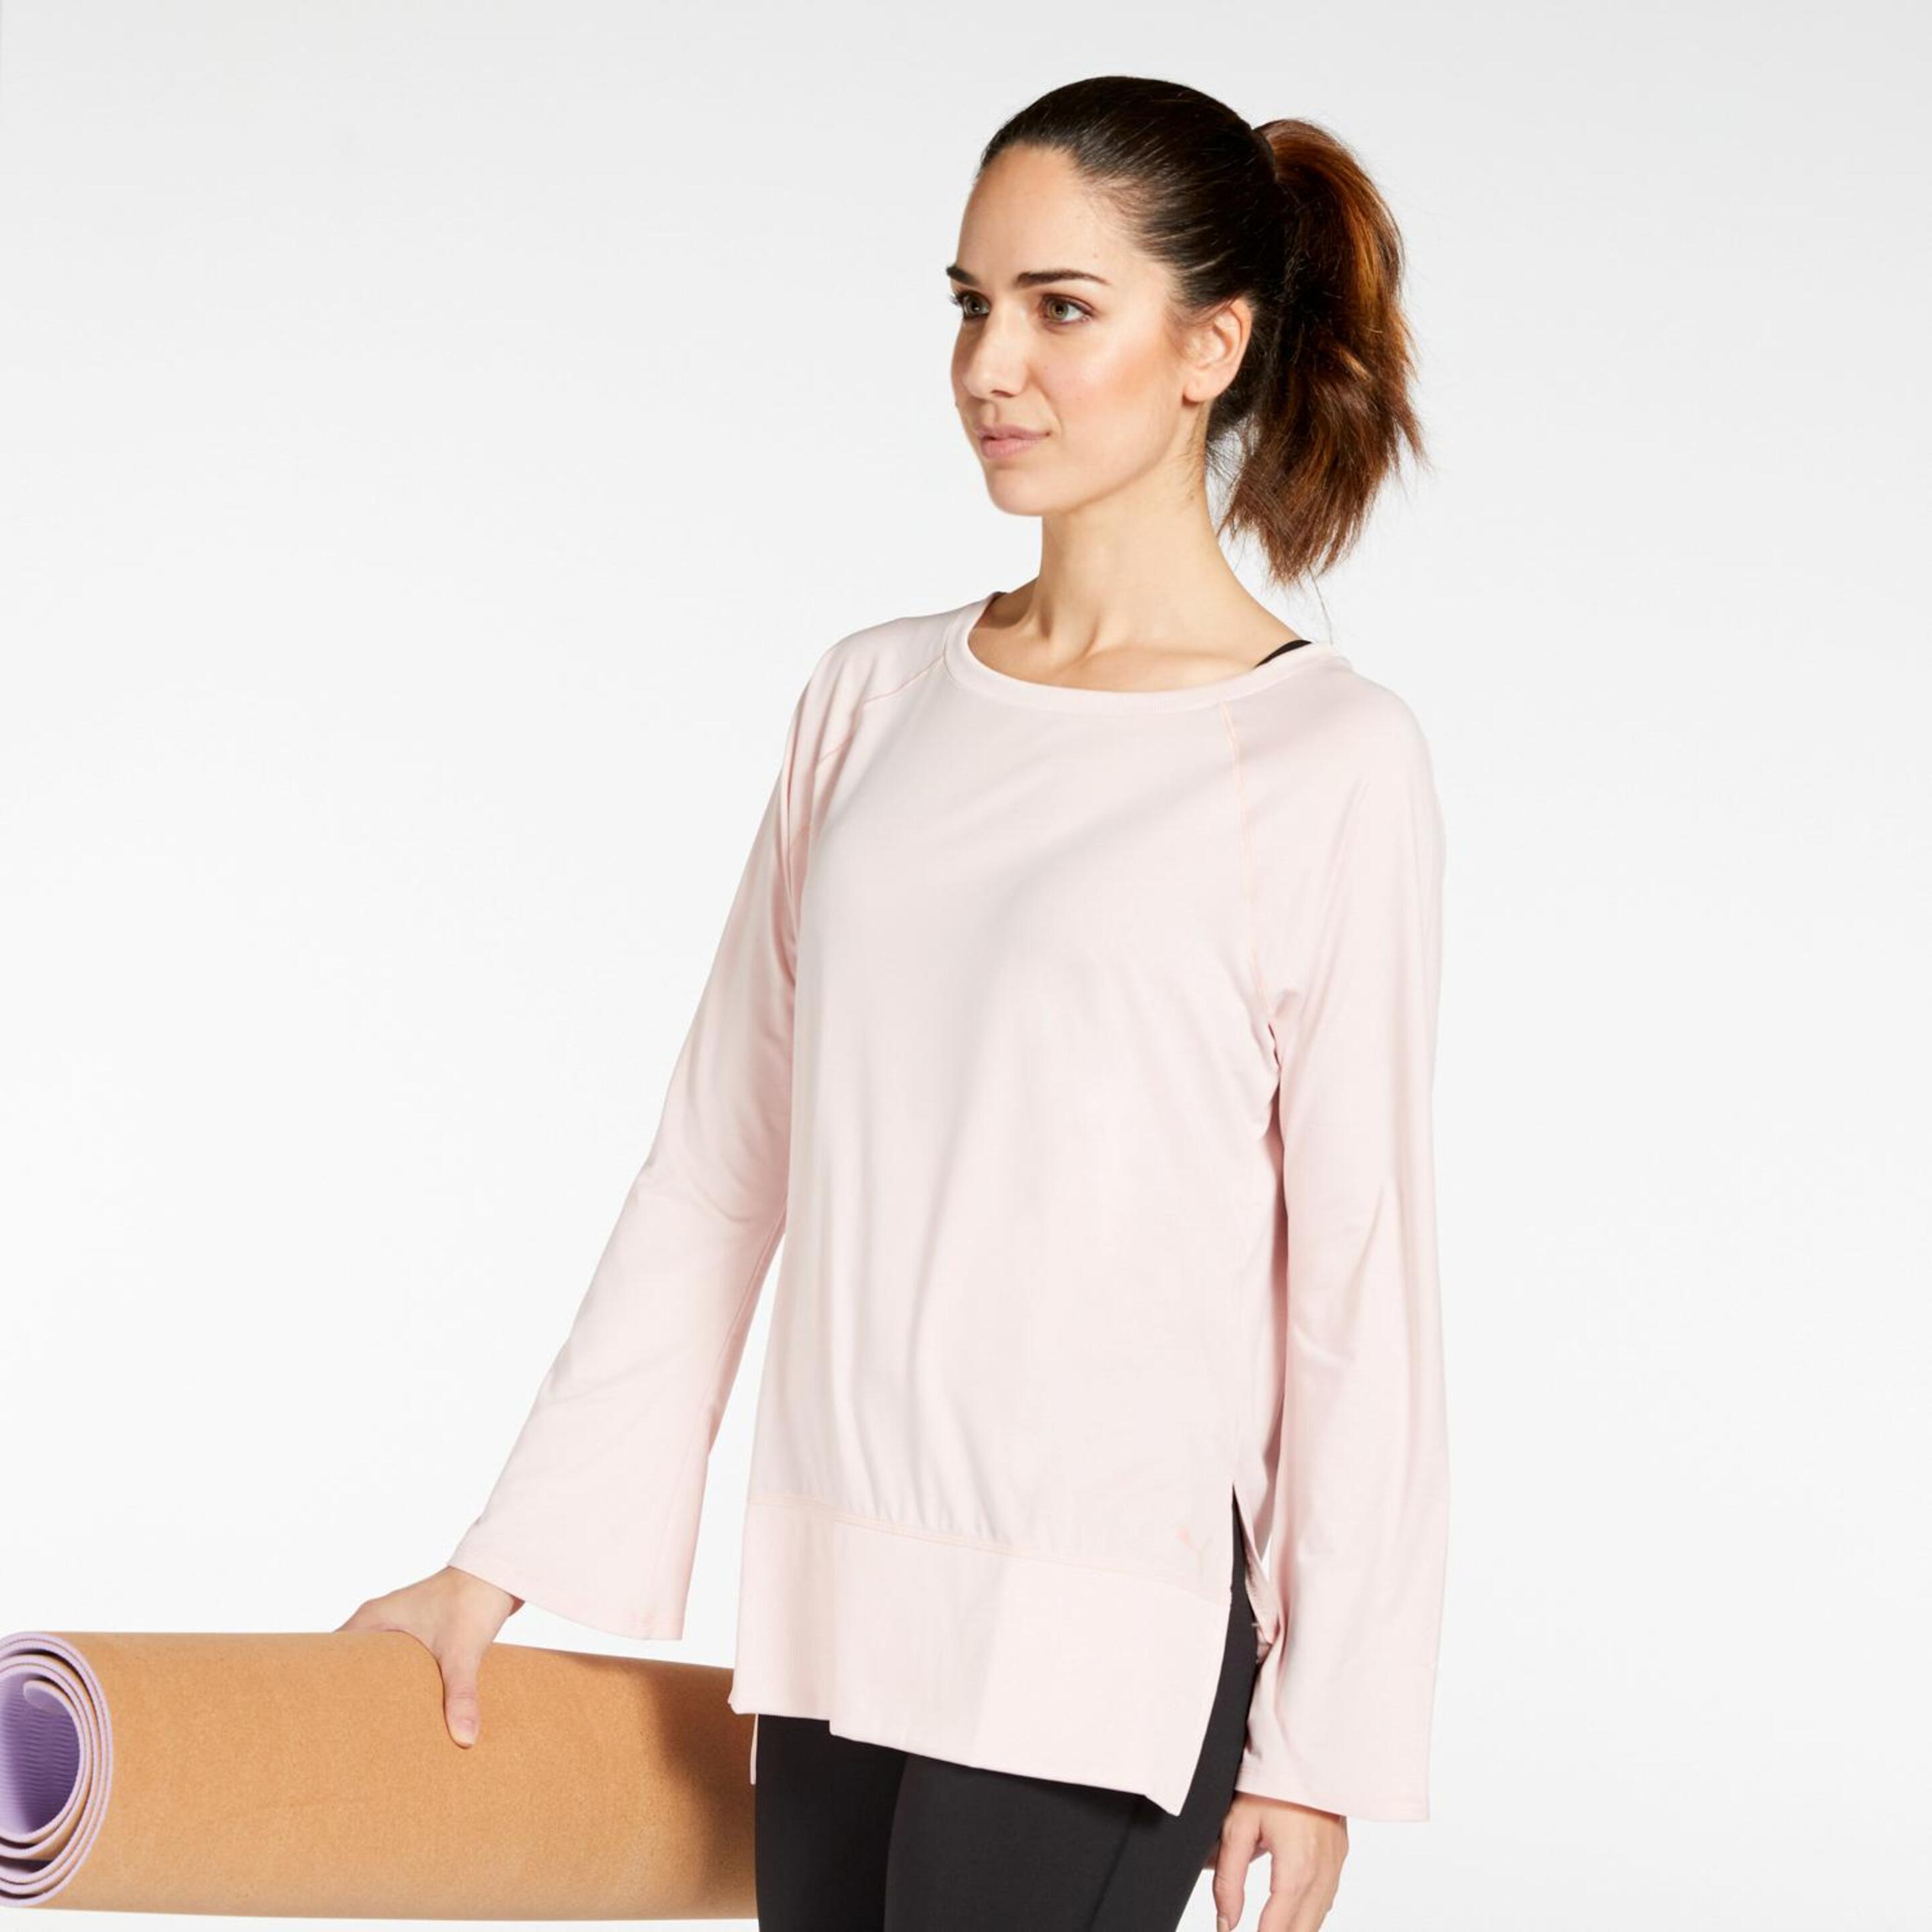 Puma Studio Yogini - Rosa - Camiseta Yoga Mujer